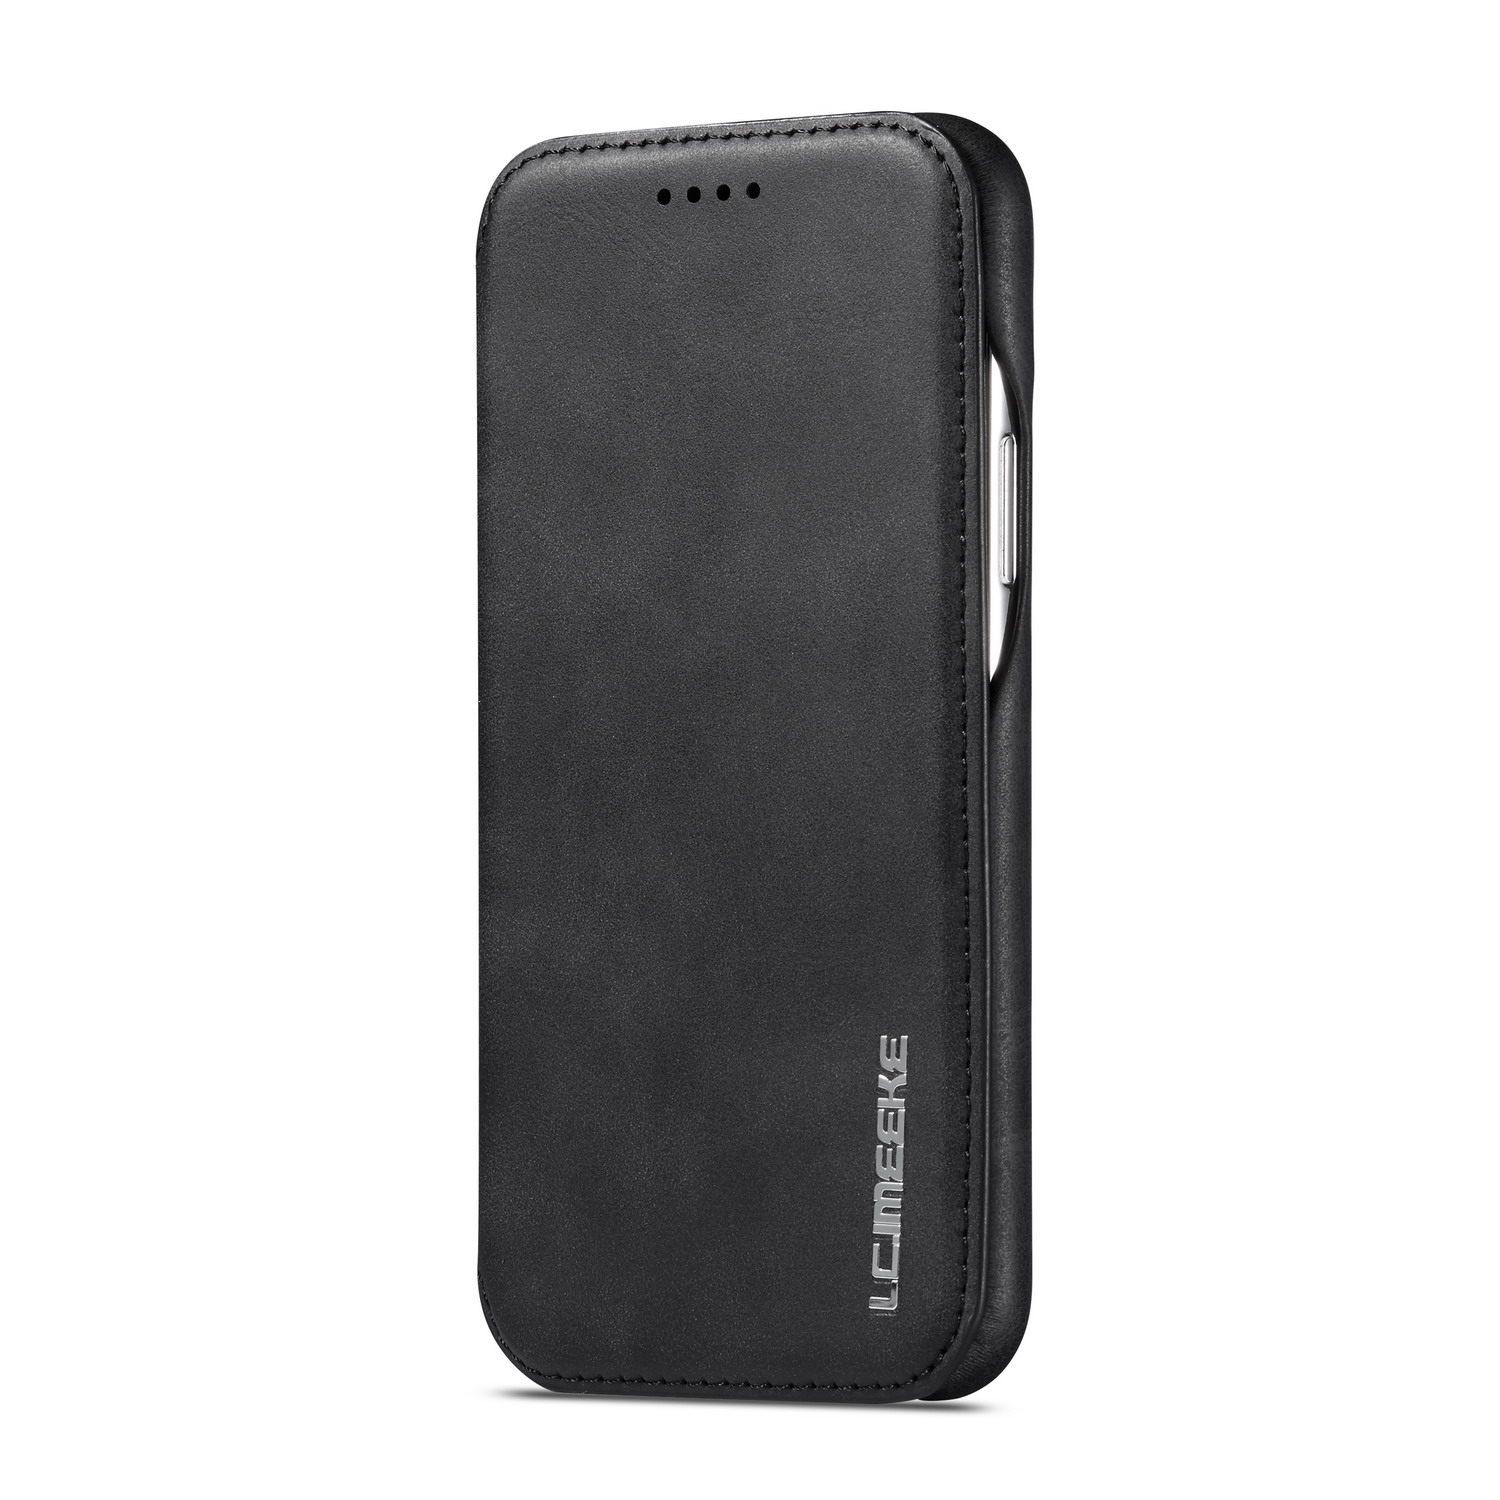 

Flip Case For iphone se 2020 11 Pro Max x xs max xr 6 6s 7 8 plus Capa Funda Etui Luxury Leather Phone coque Cover shell bag, Black